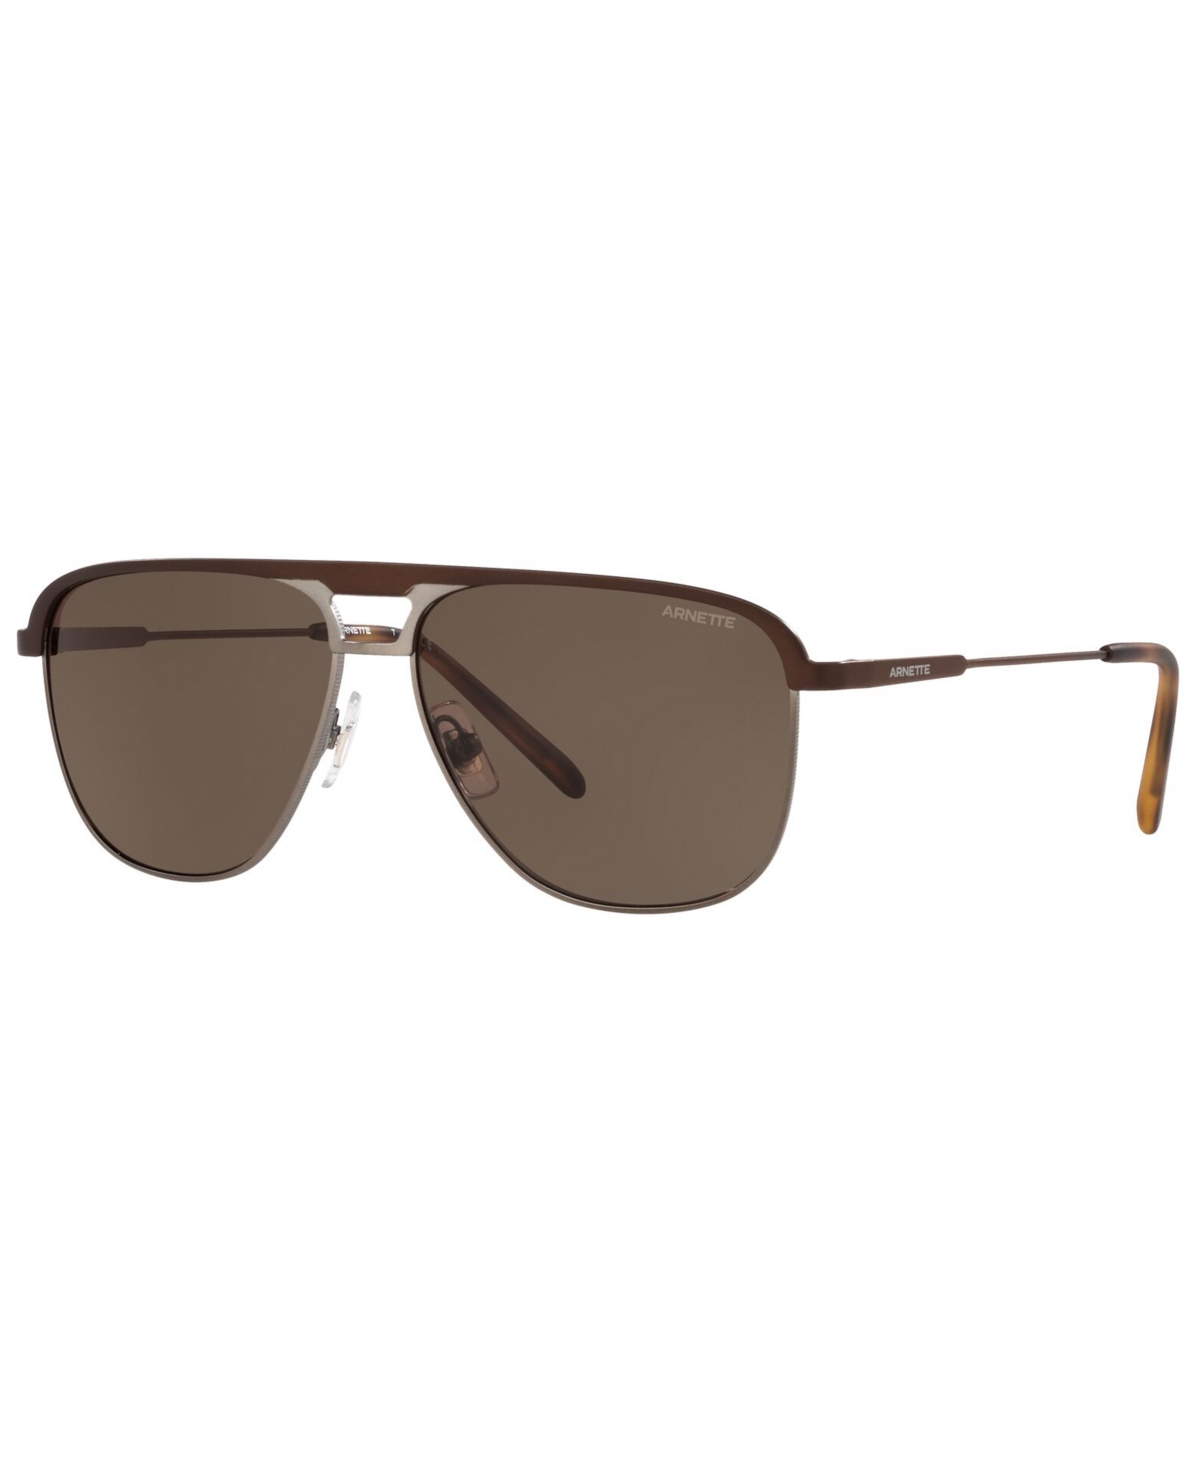 Arnette Men's Sunglasses, An3082 57 In Brown Matte,brown